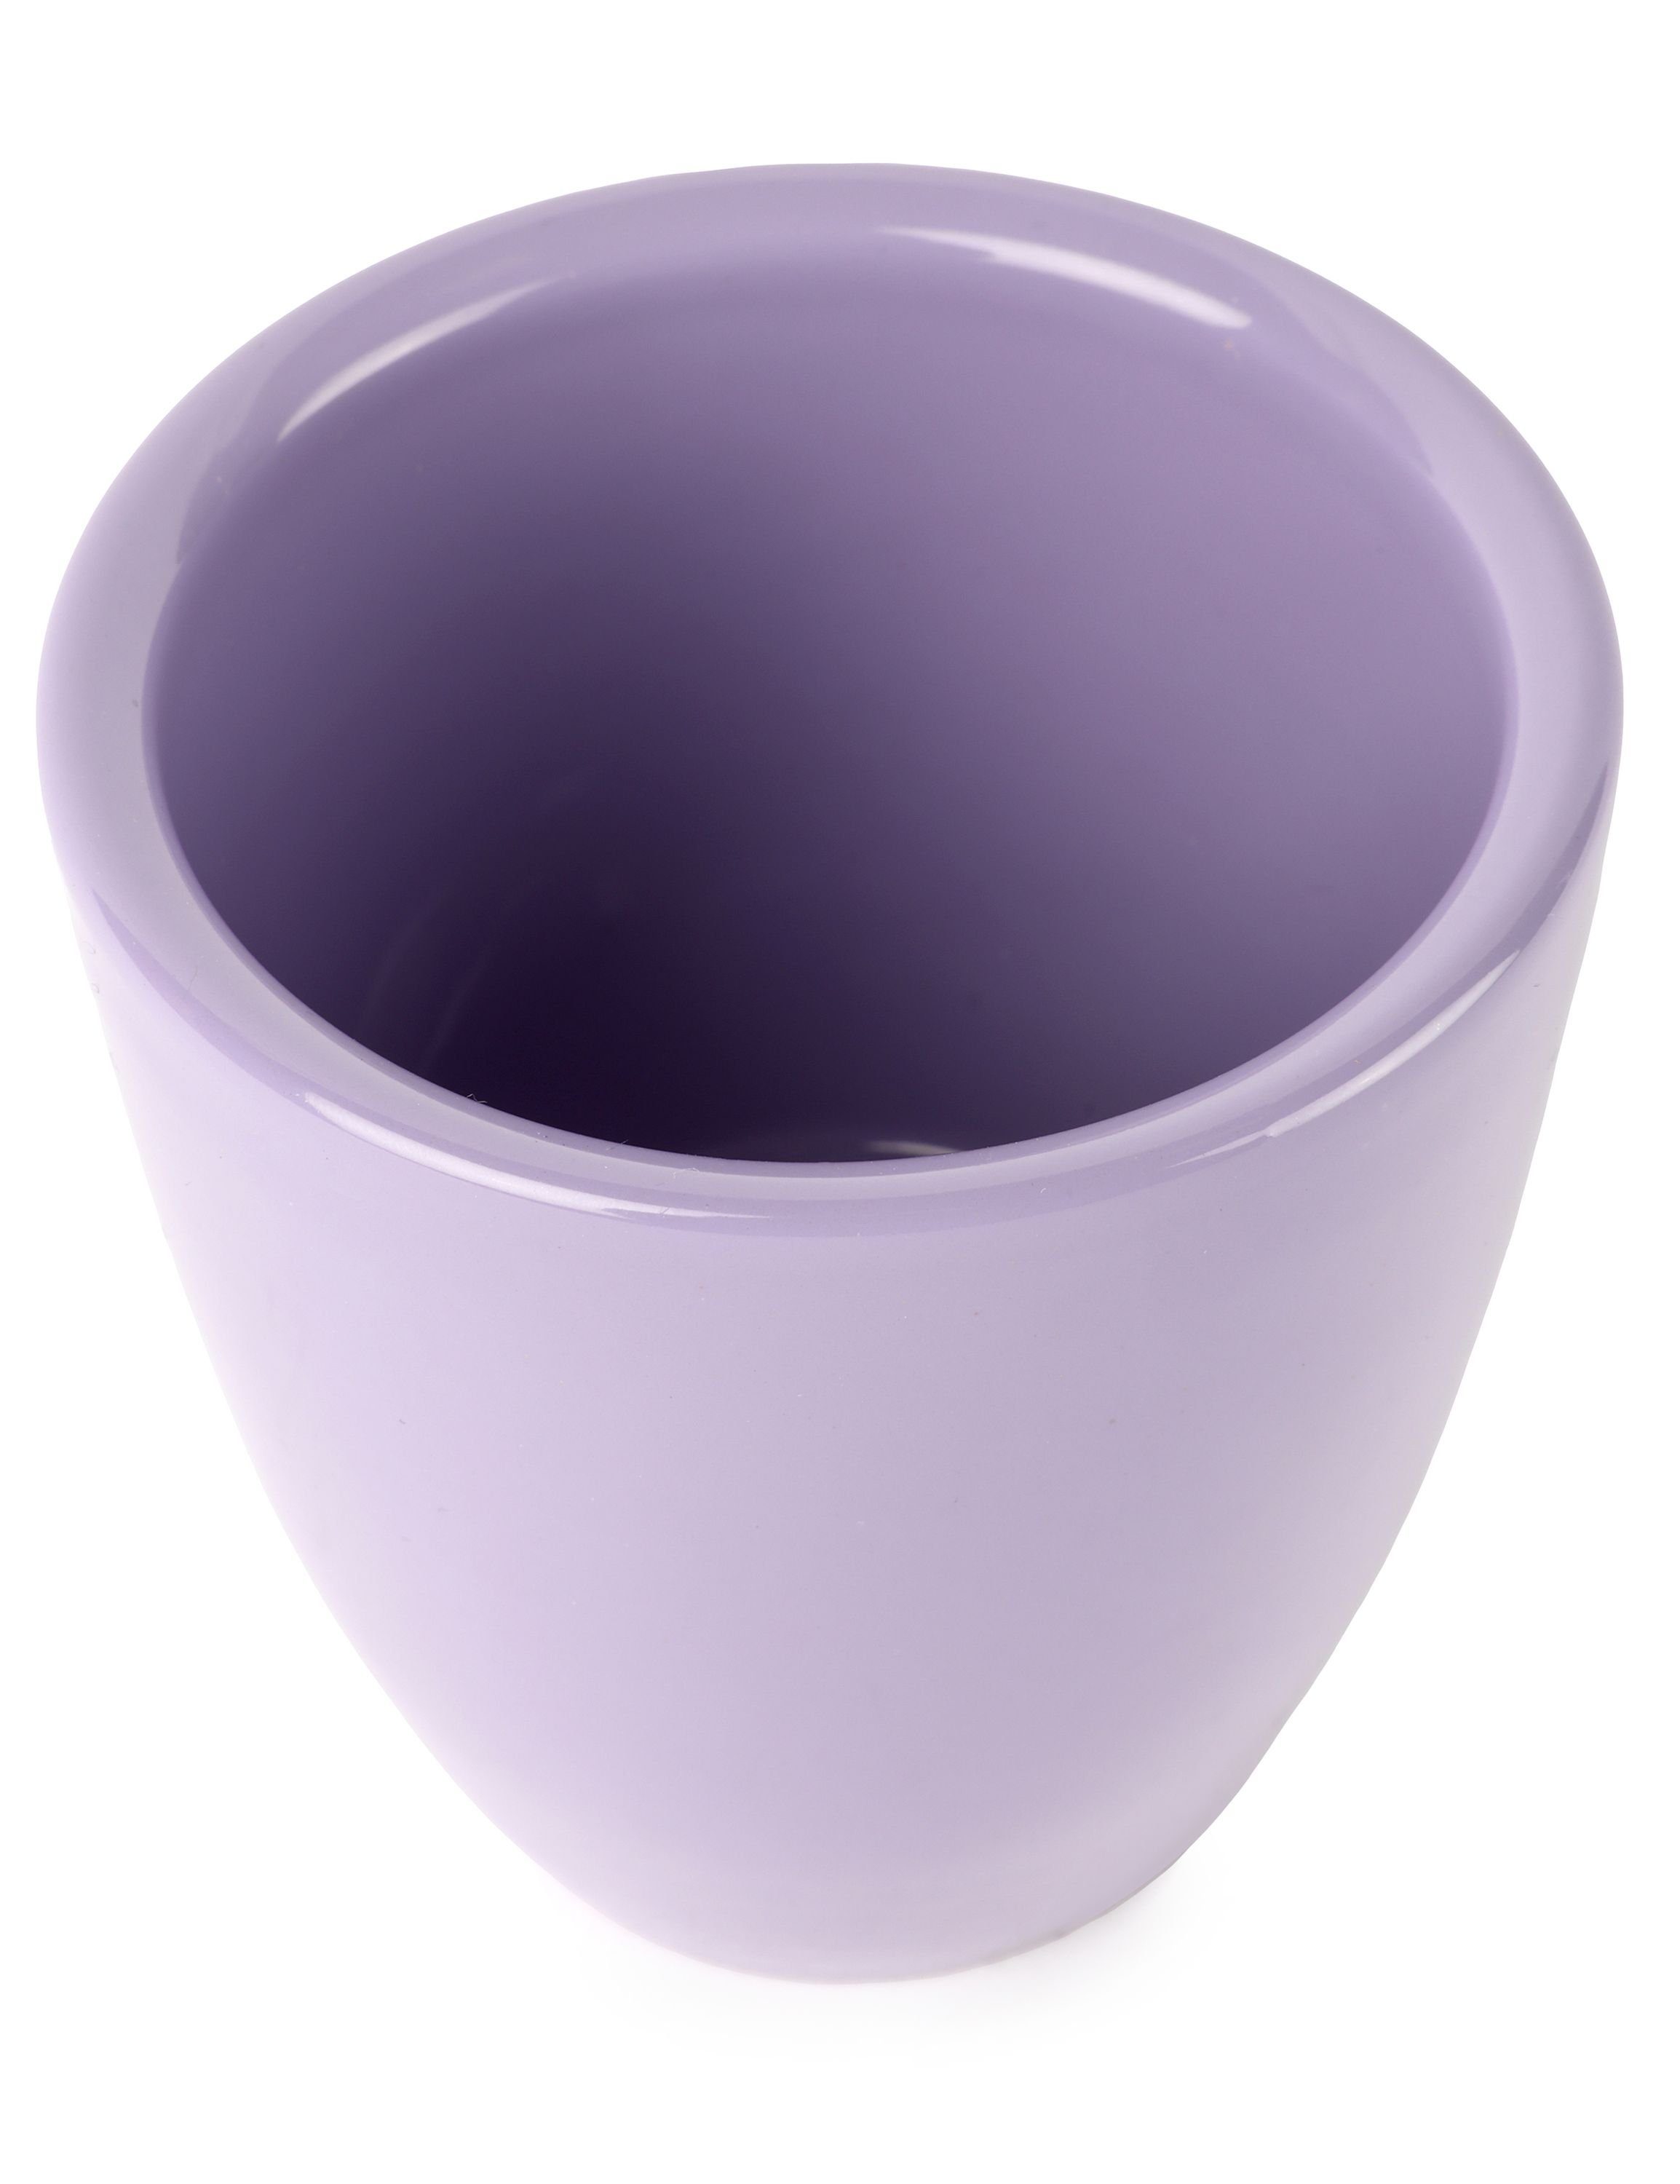 Garronda Blumentopf Pflanztopf Lavender045 Keramik GD-0017 Blumentopf